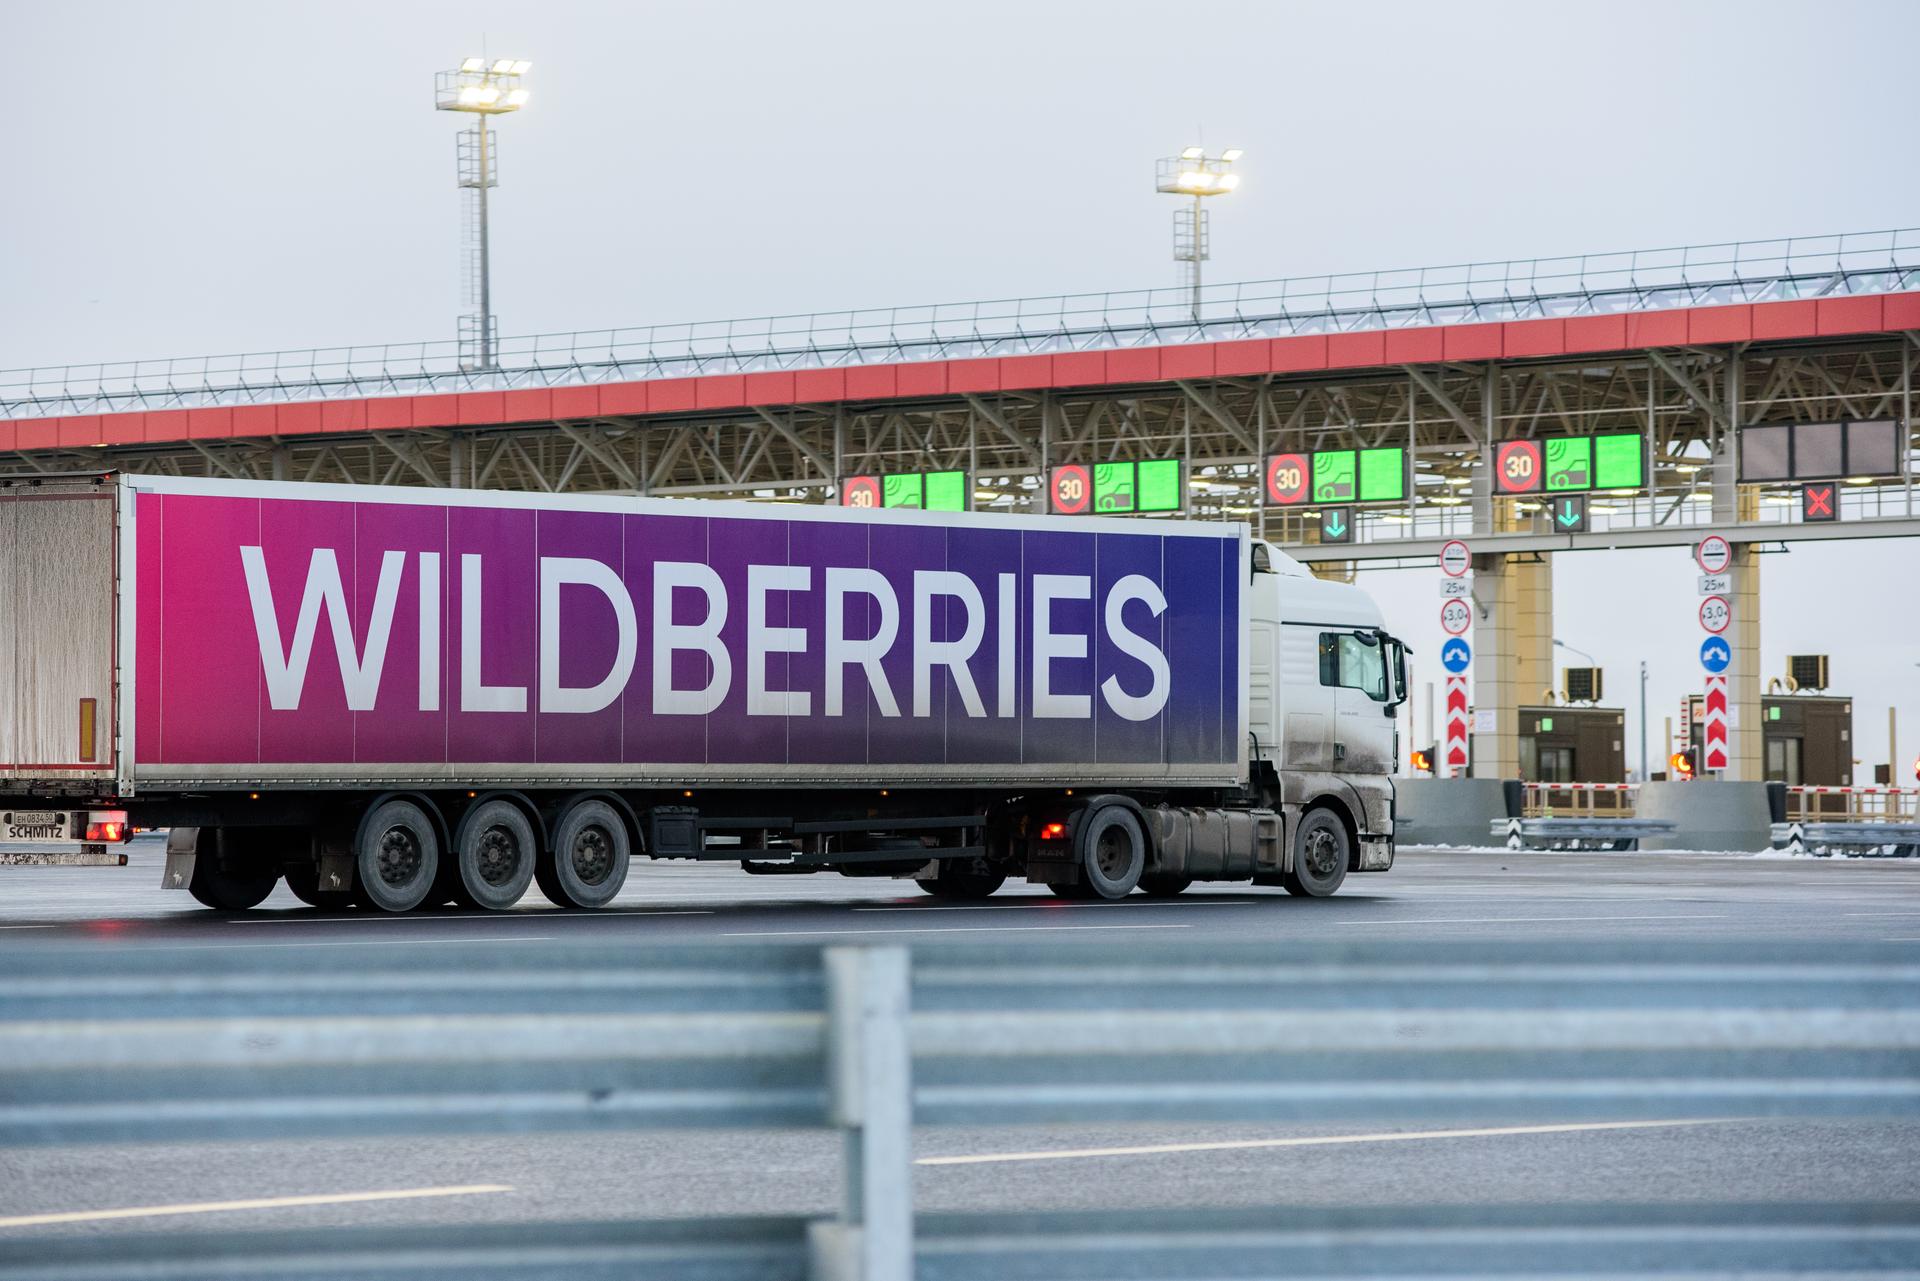 Https wildberries delivery. Wildberries грузовик. Фура вайлдберриз. Wildberries логистический центр. Вайлдберриз склад фуры.